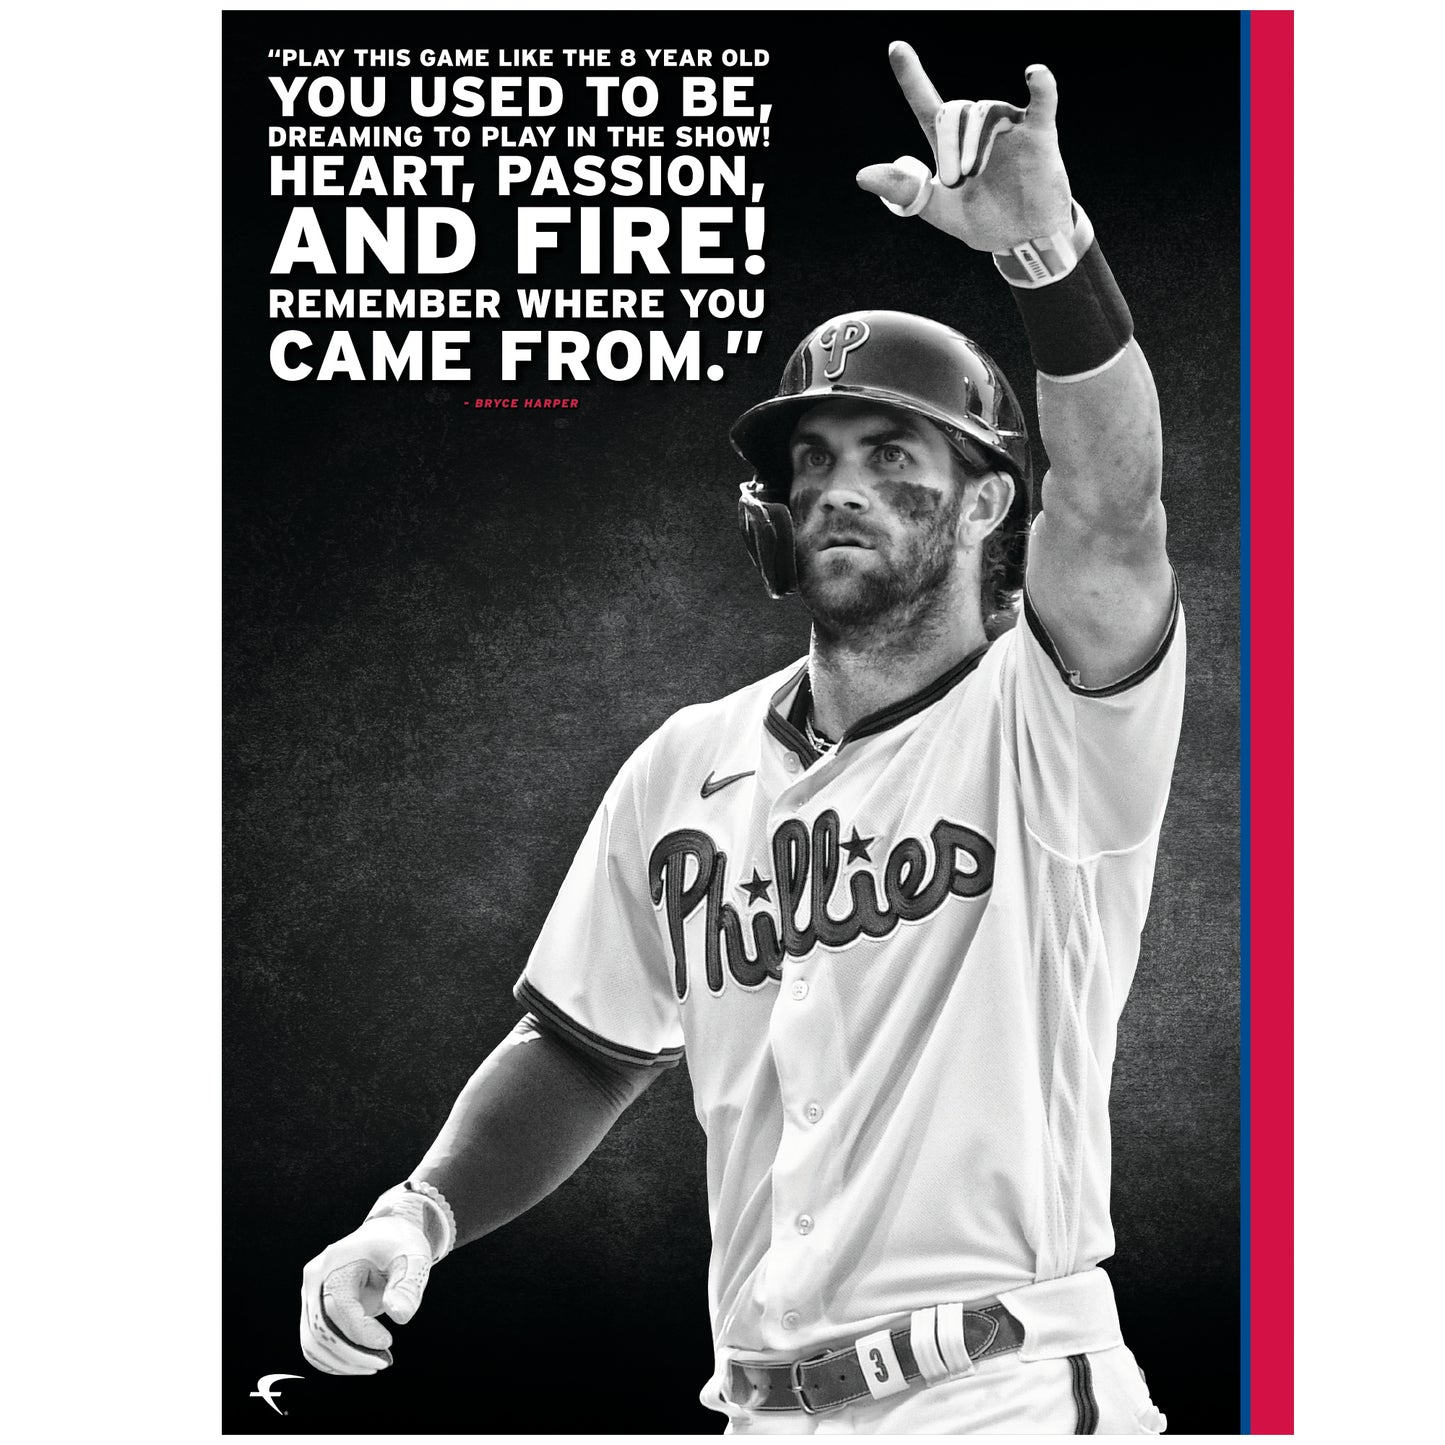 Philadelphia Phillies on X: Bryce Harper is very good at baseball